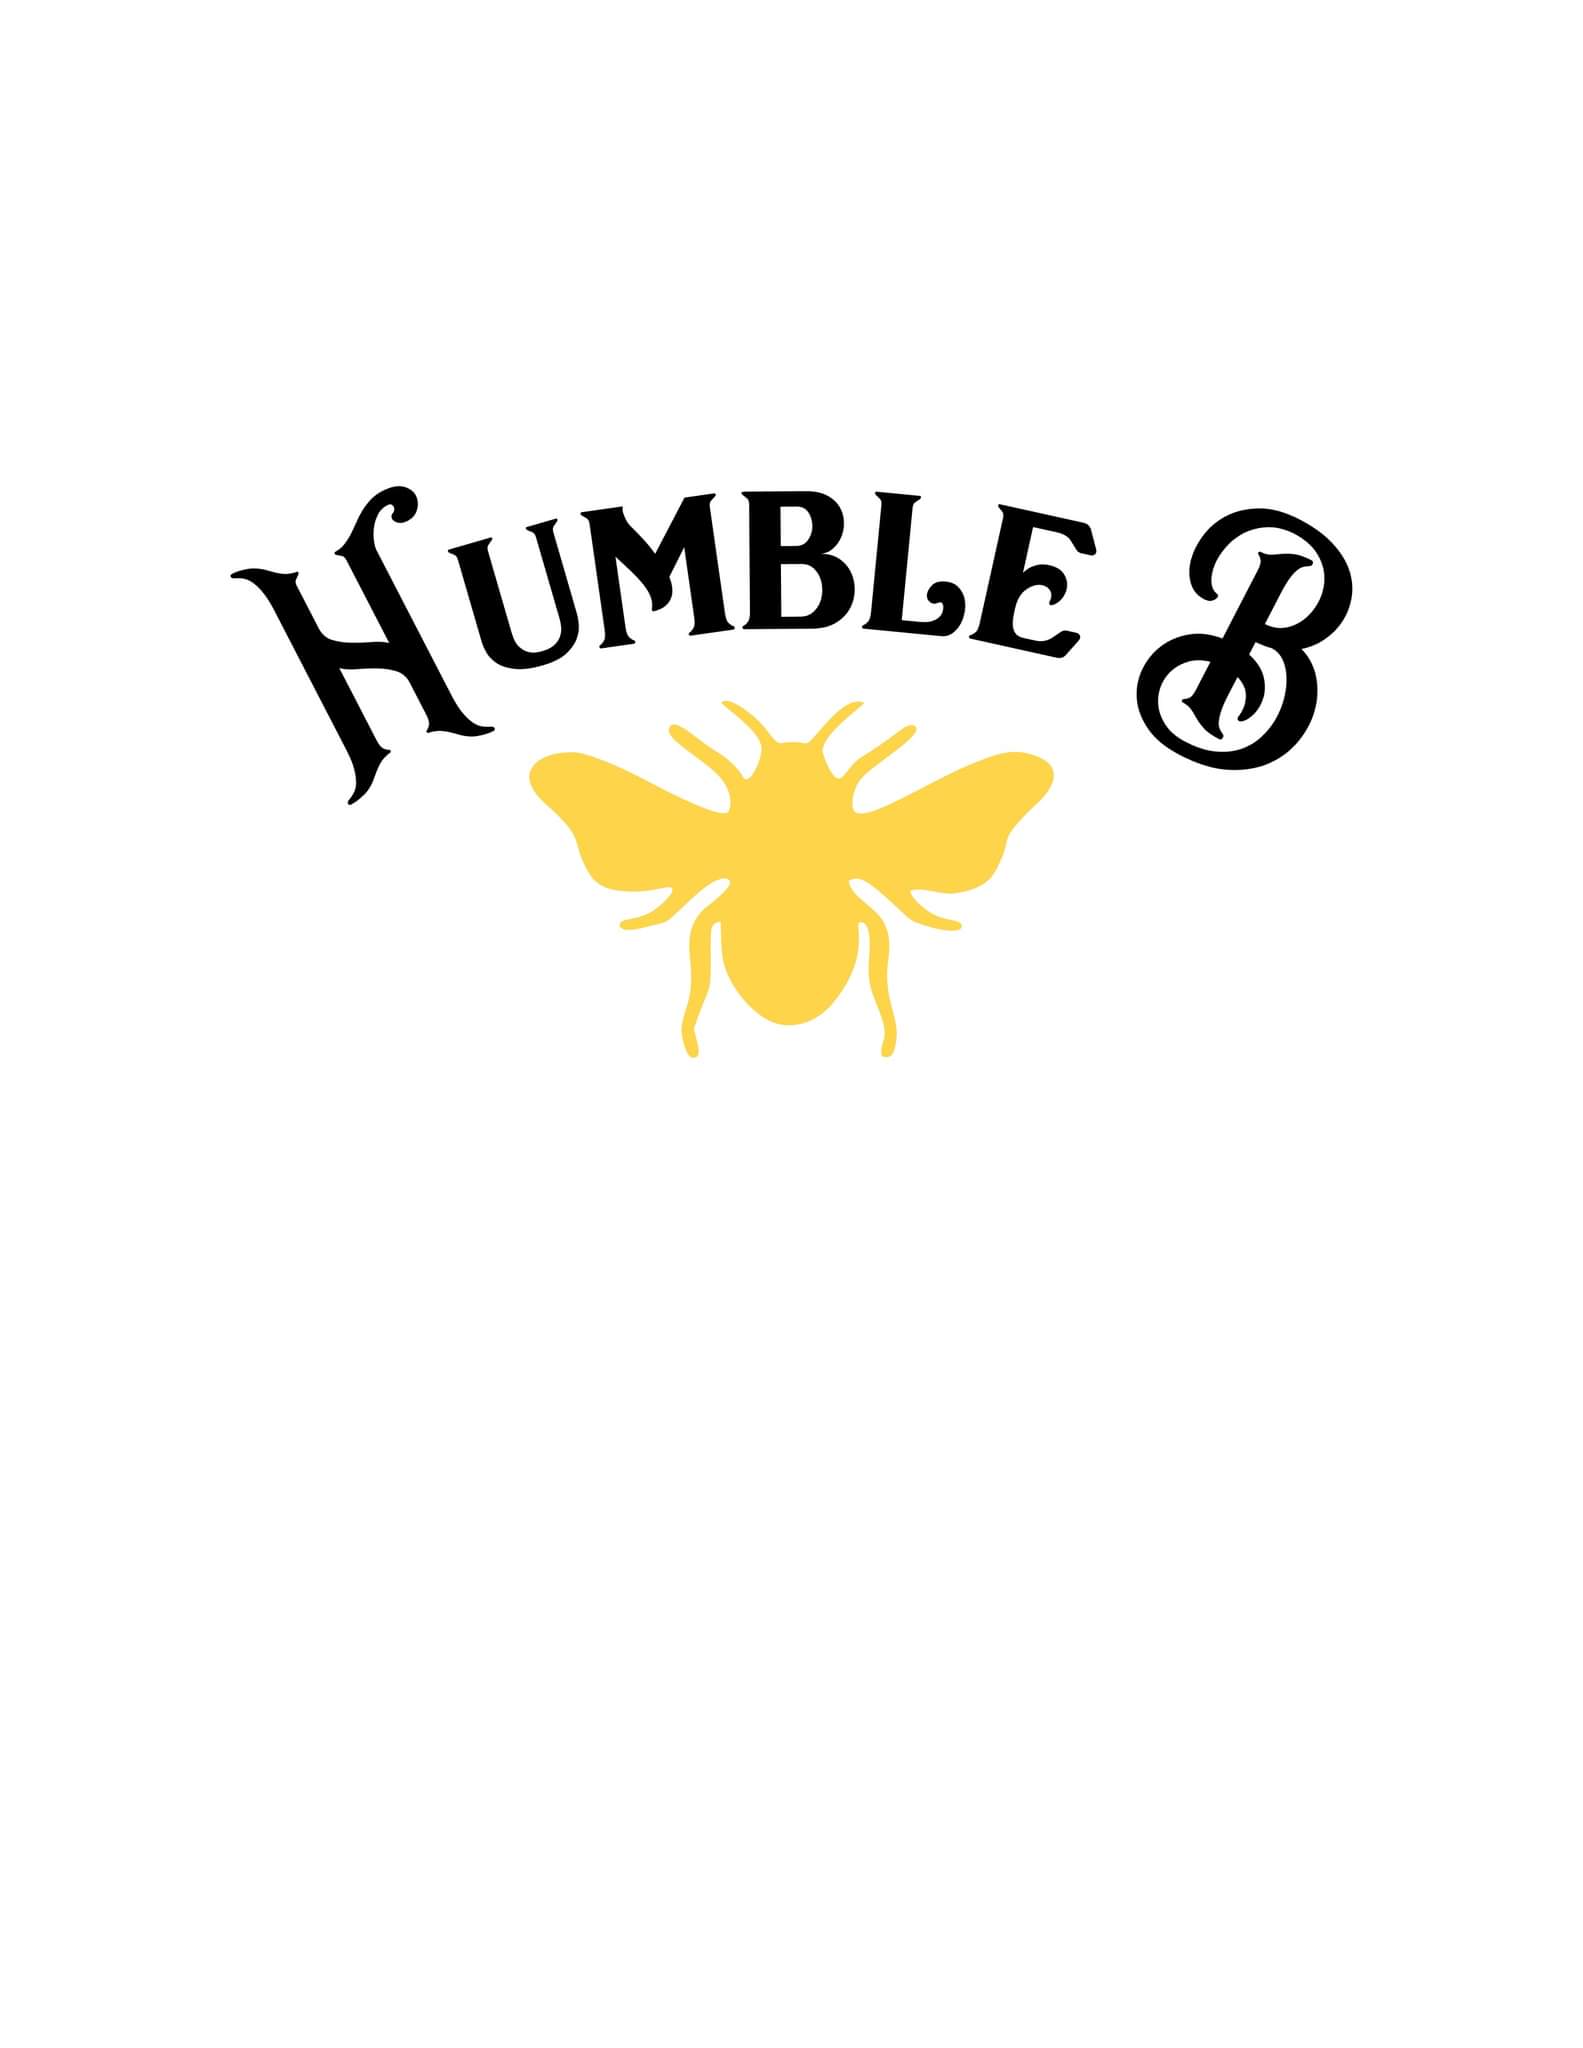 Humble B logo 